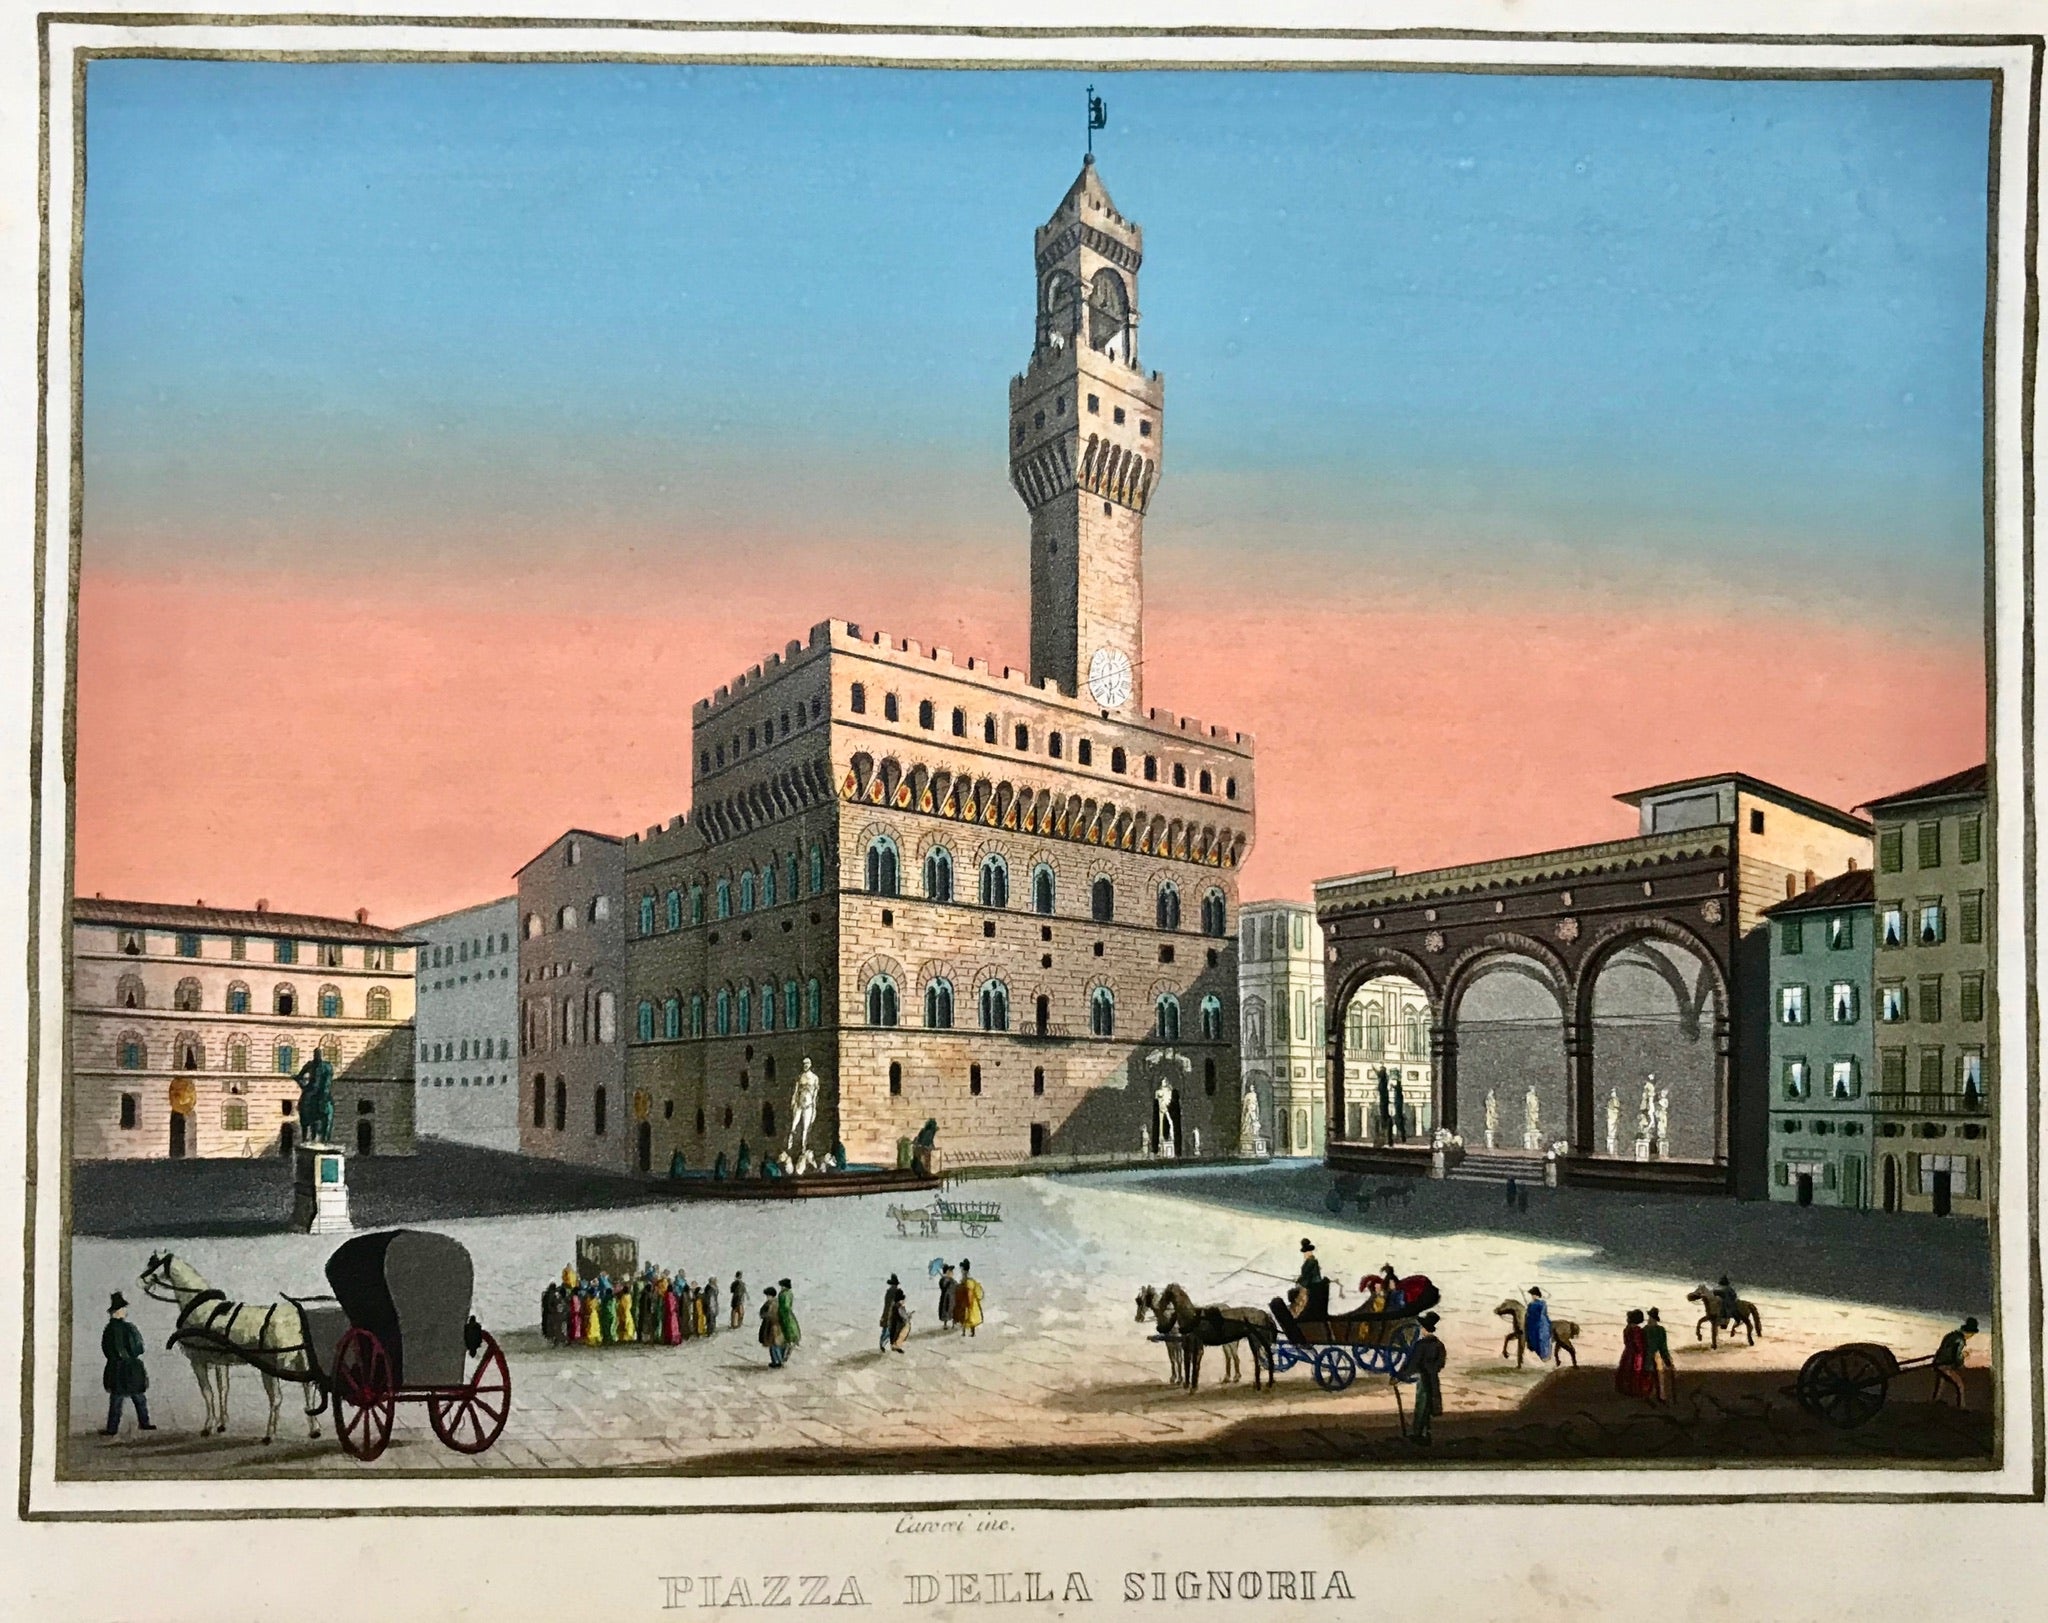 "Piazza della Signorina".  Aquatinta by Guido Carrocci. Superb gouache hand coloring. Ca. 1810. From a series of 31 views by Carrocci.